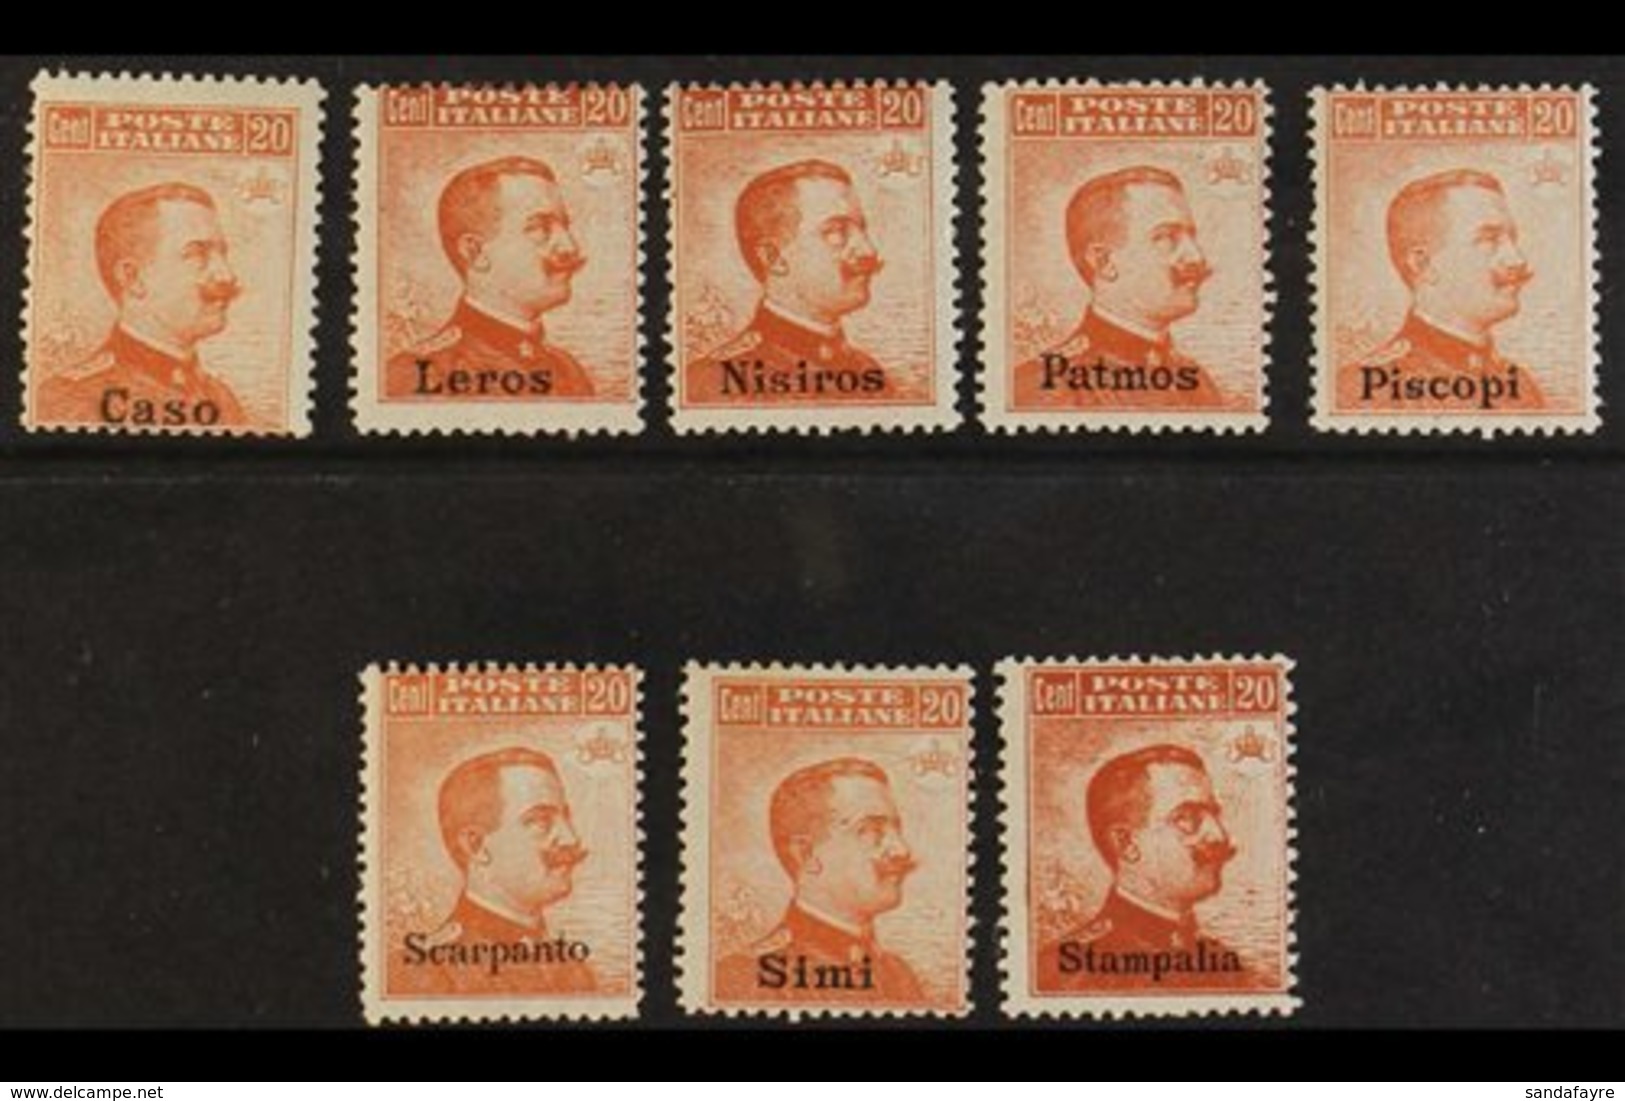 1917 20c Orange, No Watermark Ovptd Issues From Caso, Leros, Nisiros, Patmos, Piscopi, Scarpanto, Simi & Stampalia, Sass - Ägäis